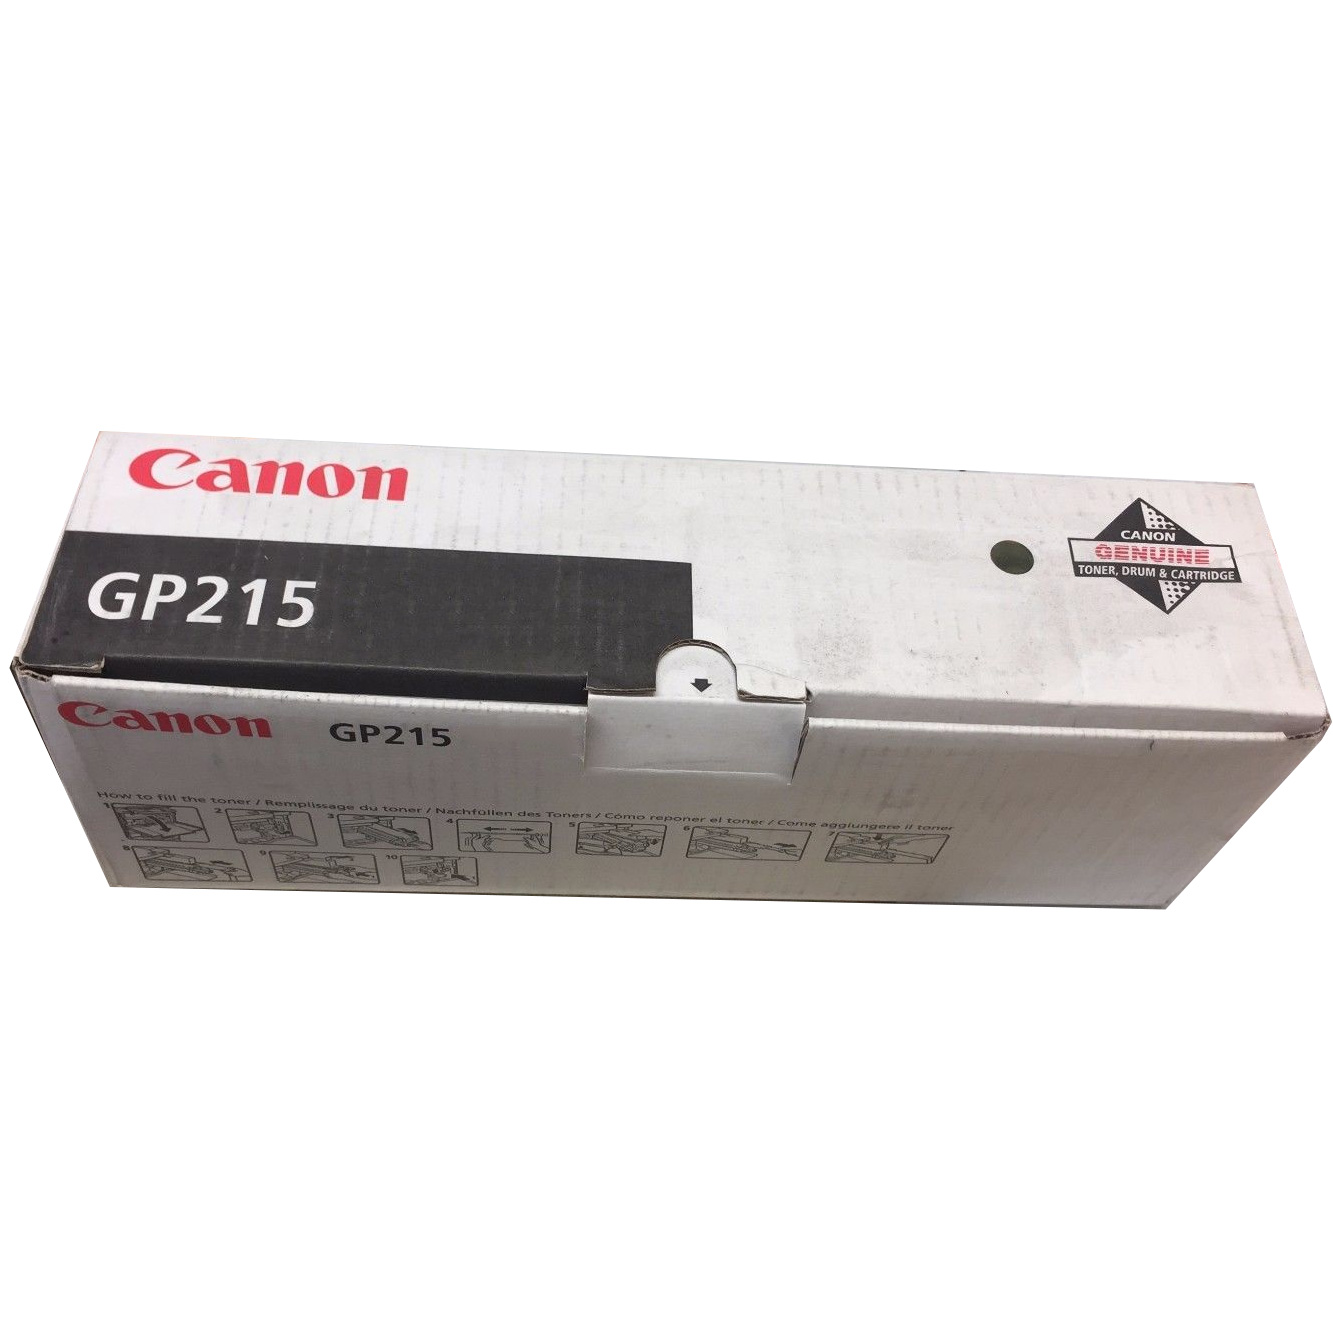 Original Canon GP215 Drum Unit (1341A002AA)